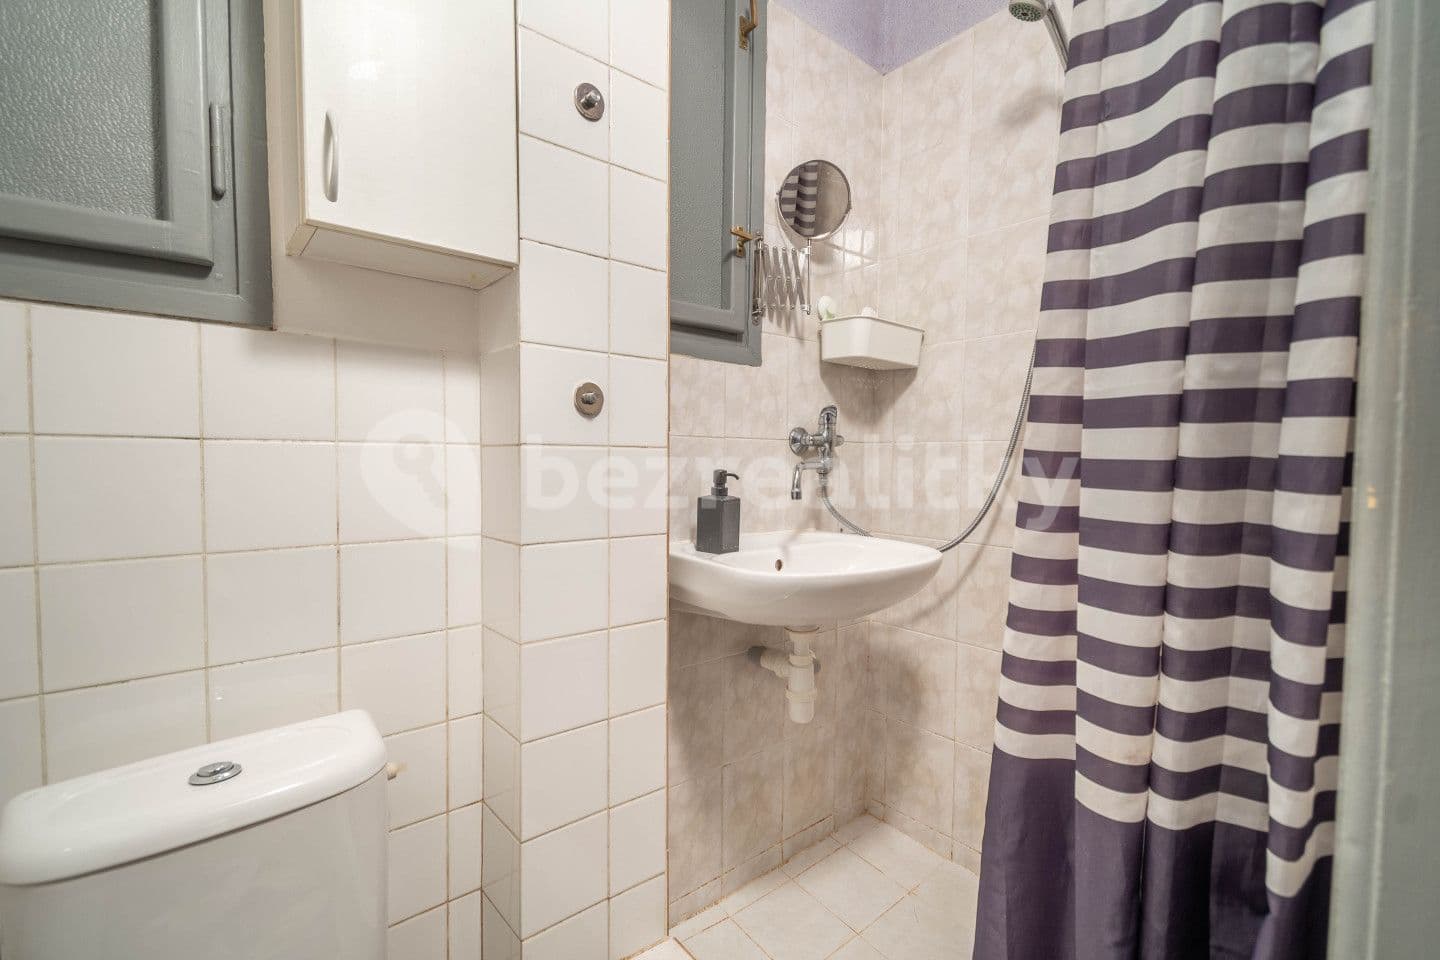 1 bedroom flat for sale, 35 m², Prouzova, Prague, Prague